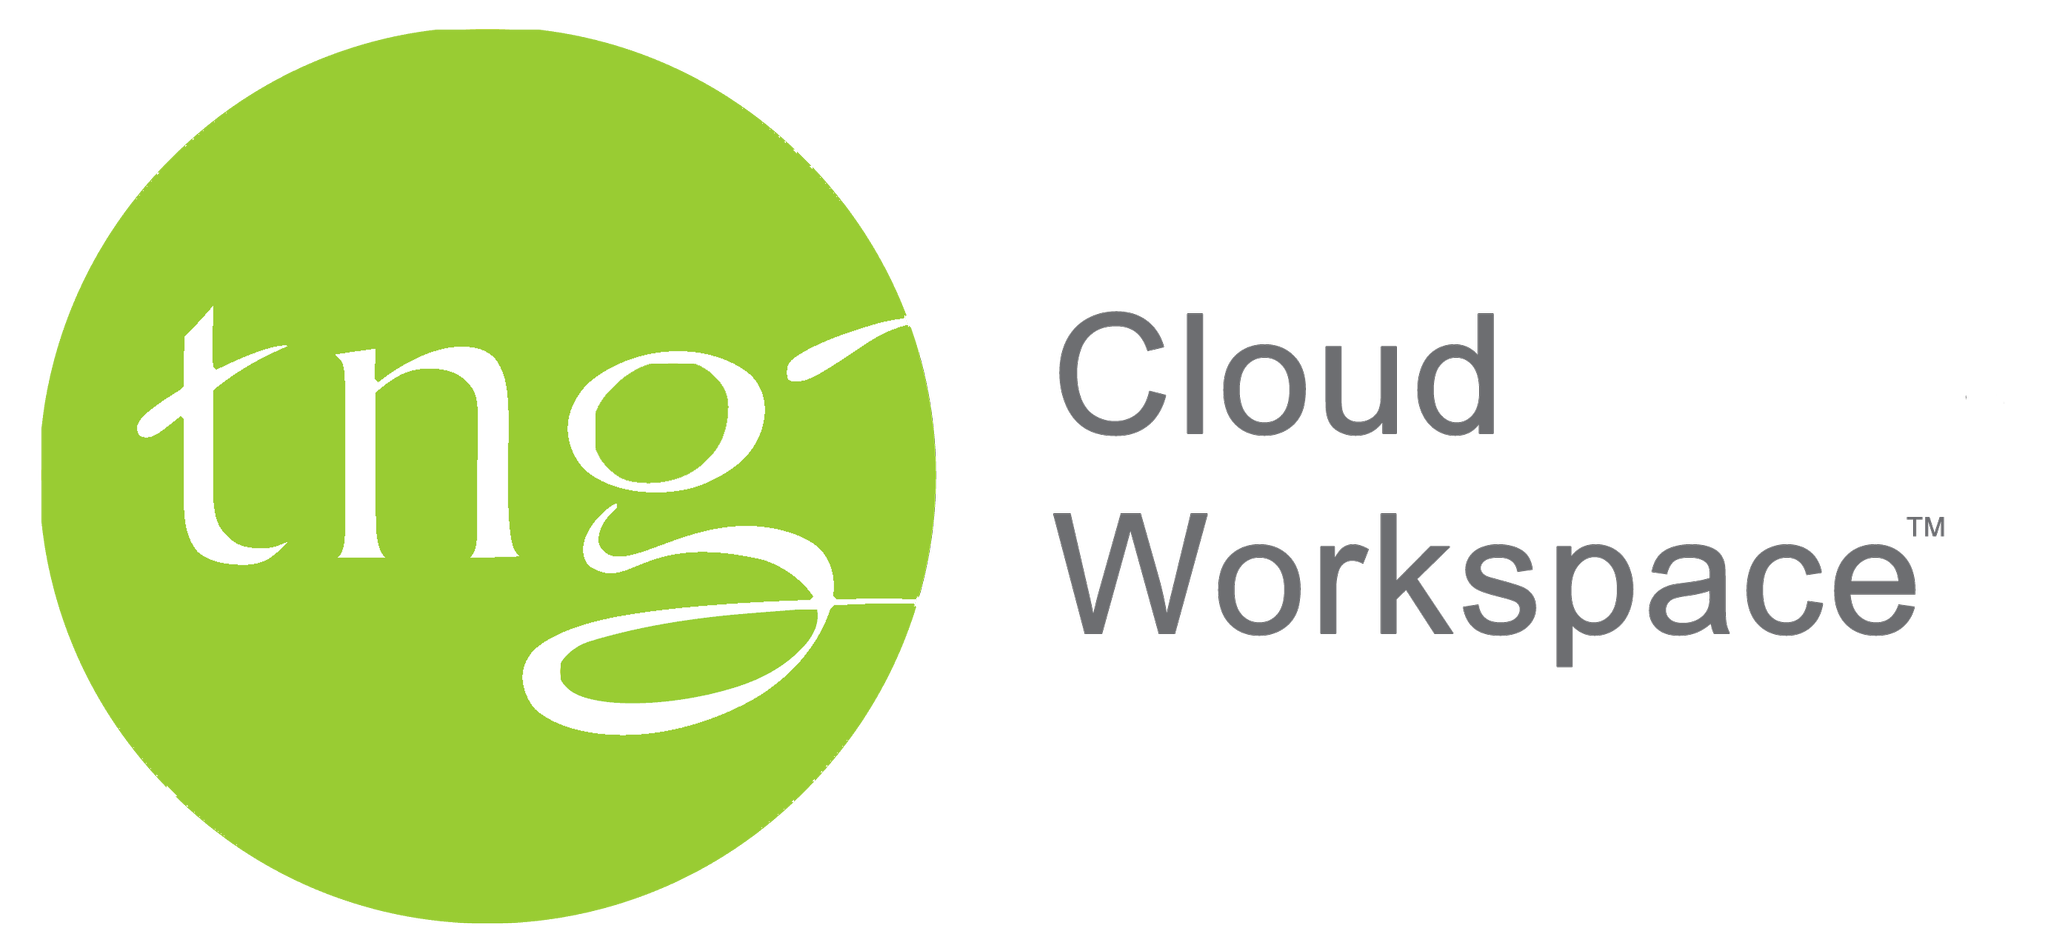 tng cloud workspace logo